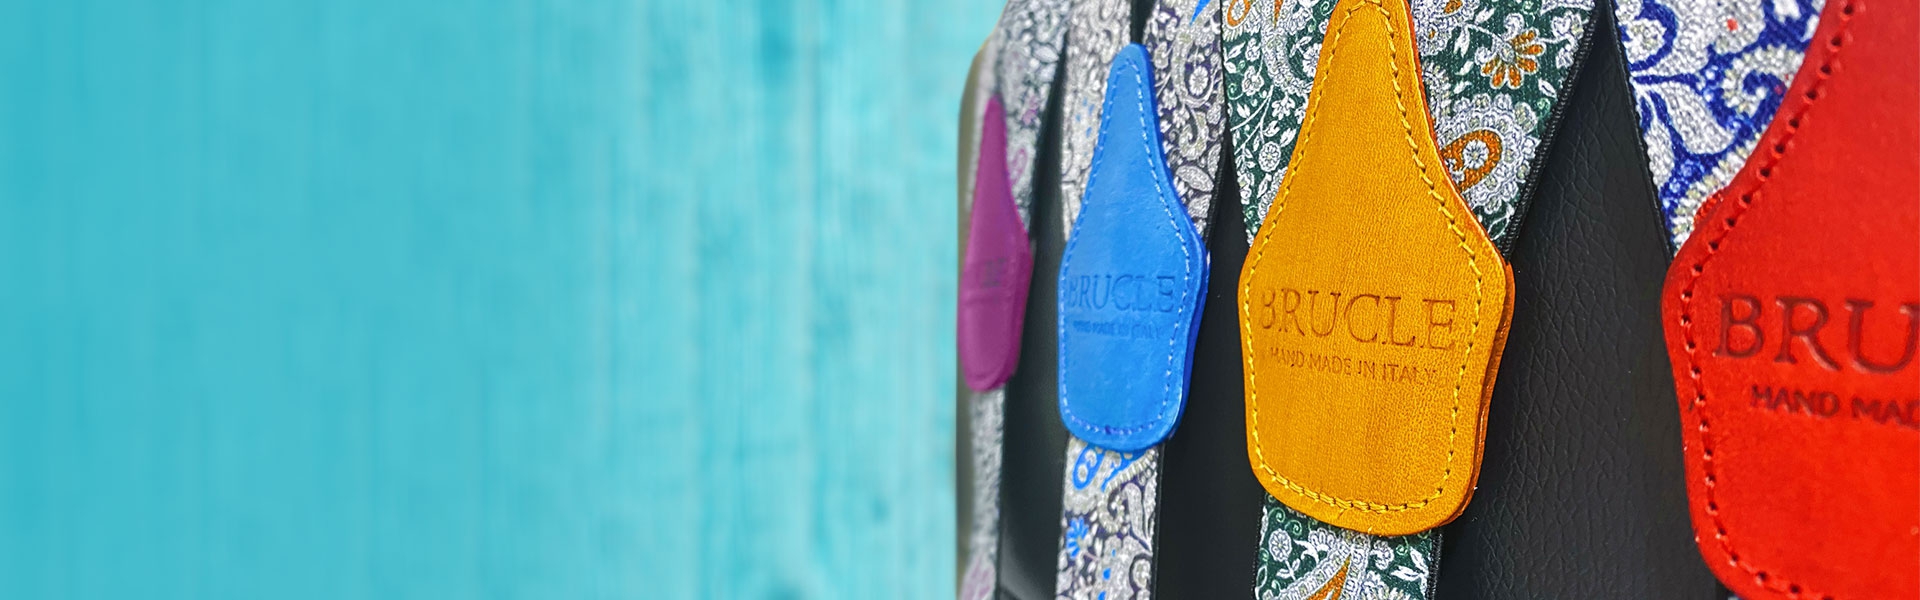 Brucle Elastic Burgundy Suspenders for Men with Geometric Pattern